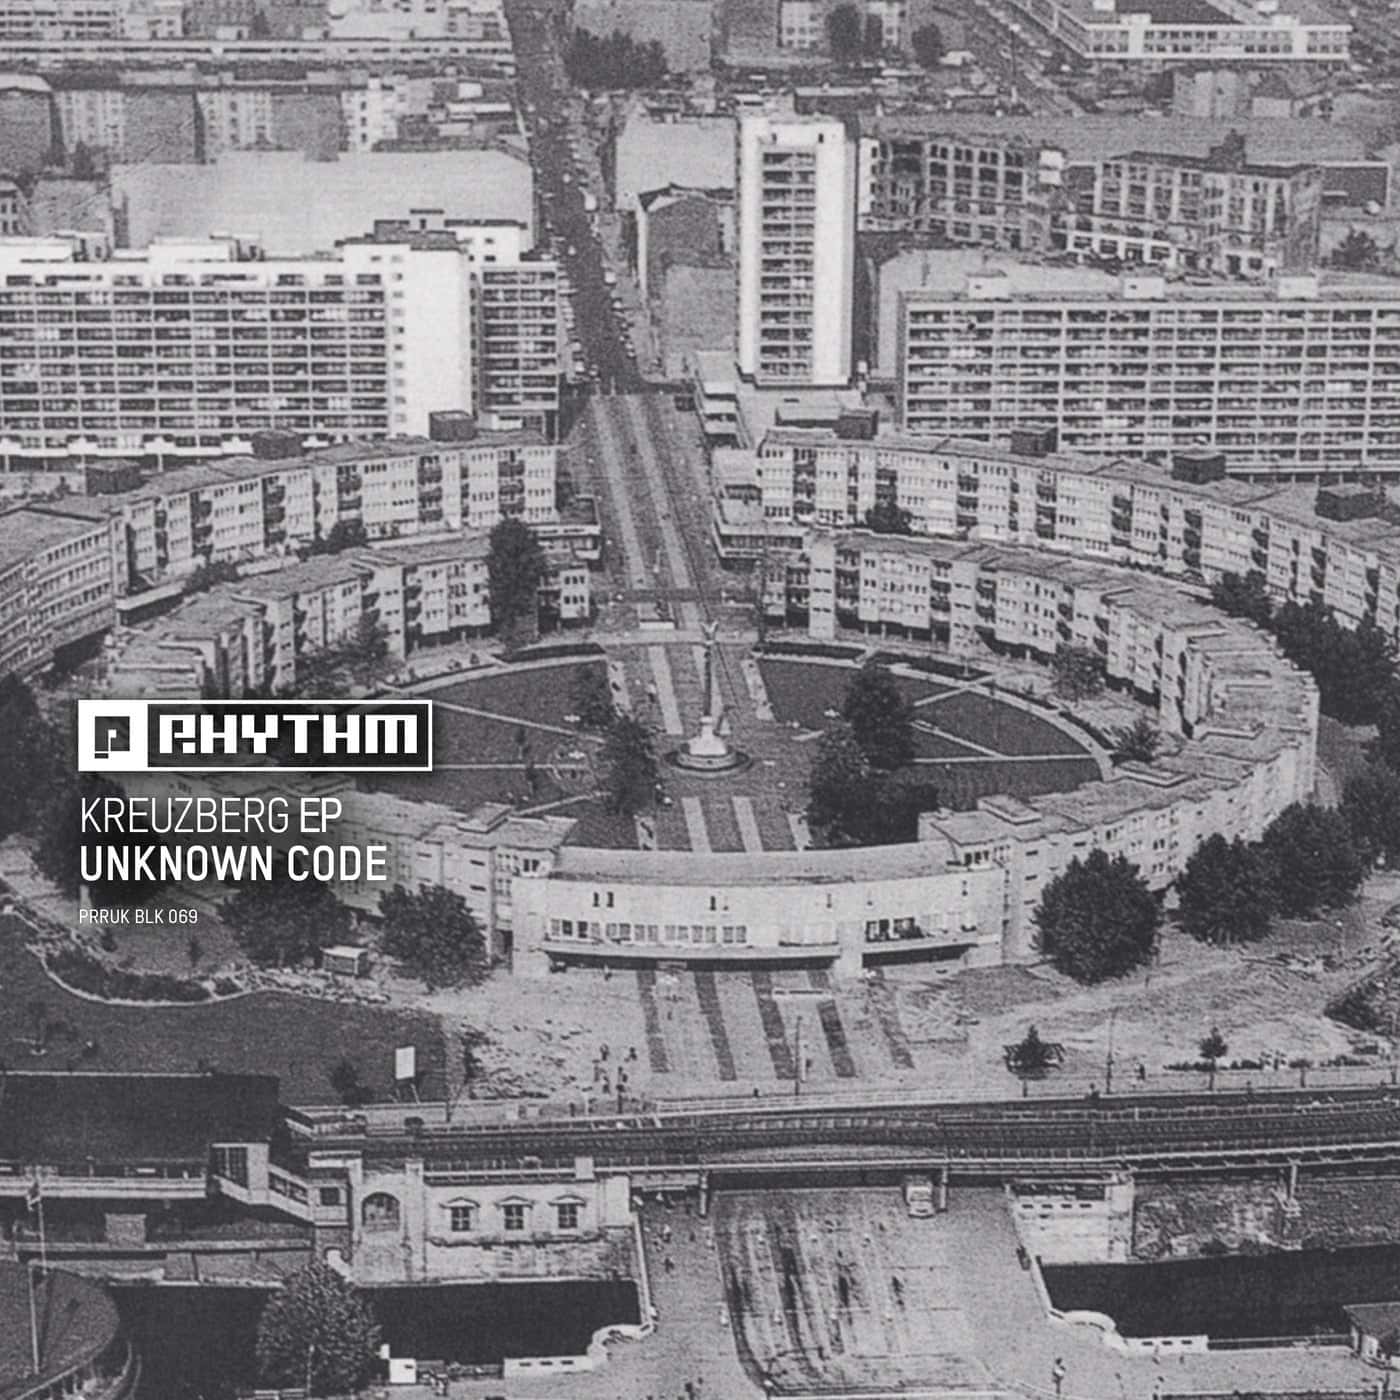 image cover: Unknown Code - Kreuzberg EP / PRRUKBLK069